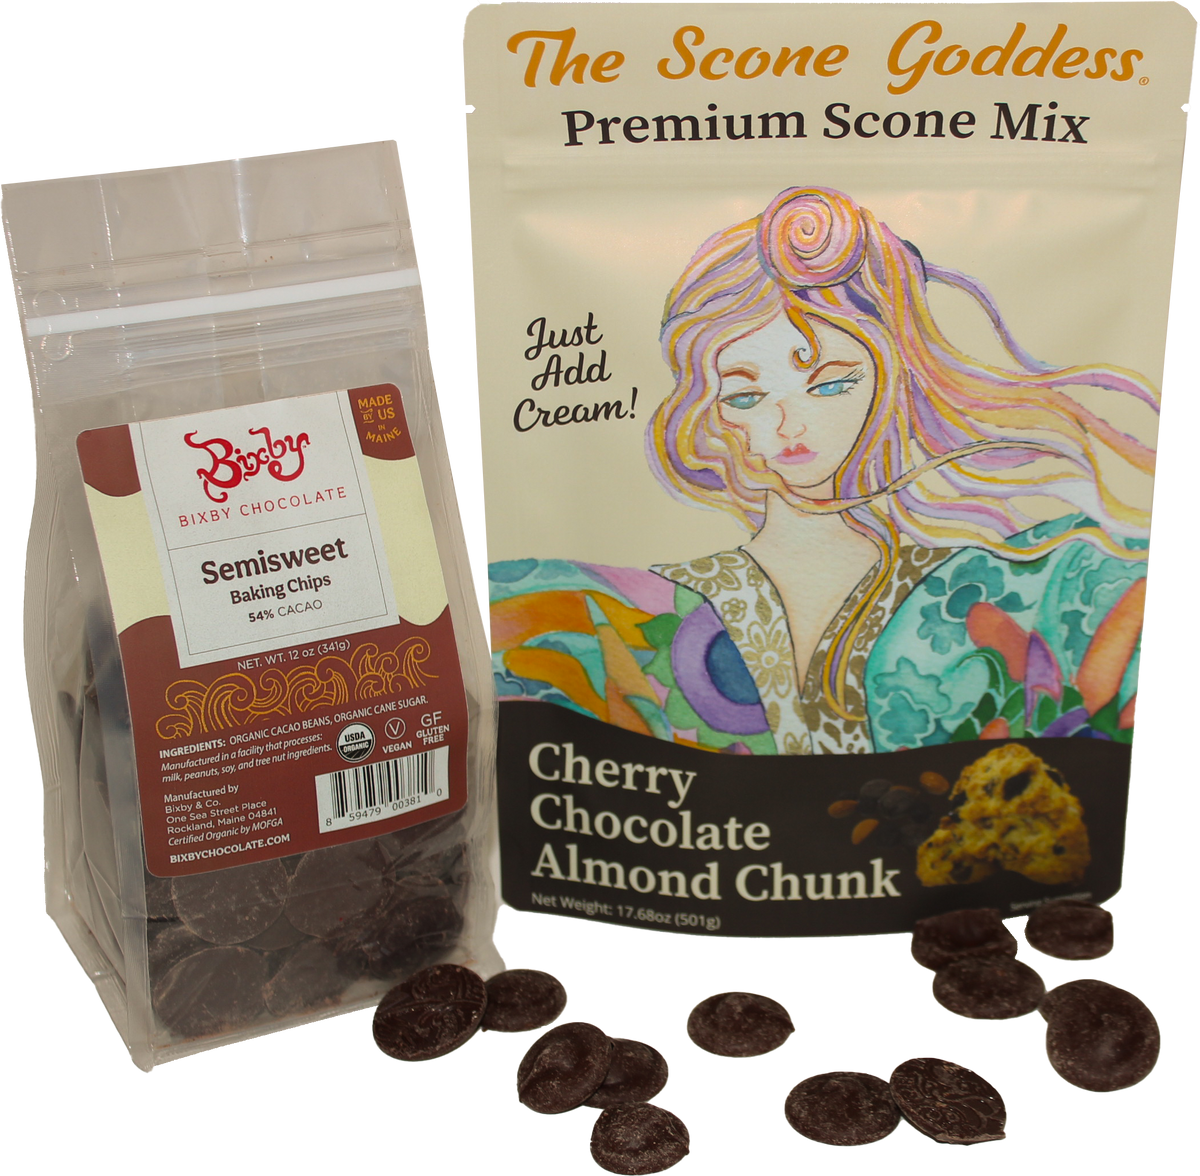 Cherry Chocolate Almond Chunk Scone Goddess Scone Mix